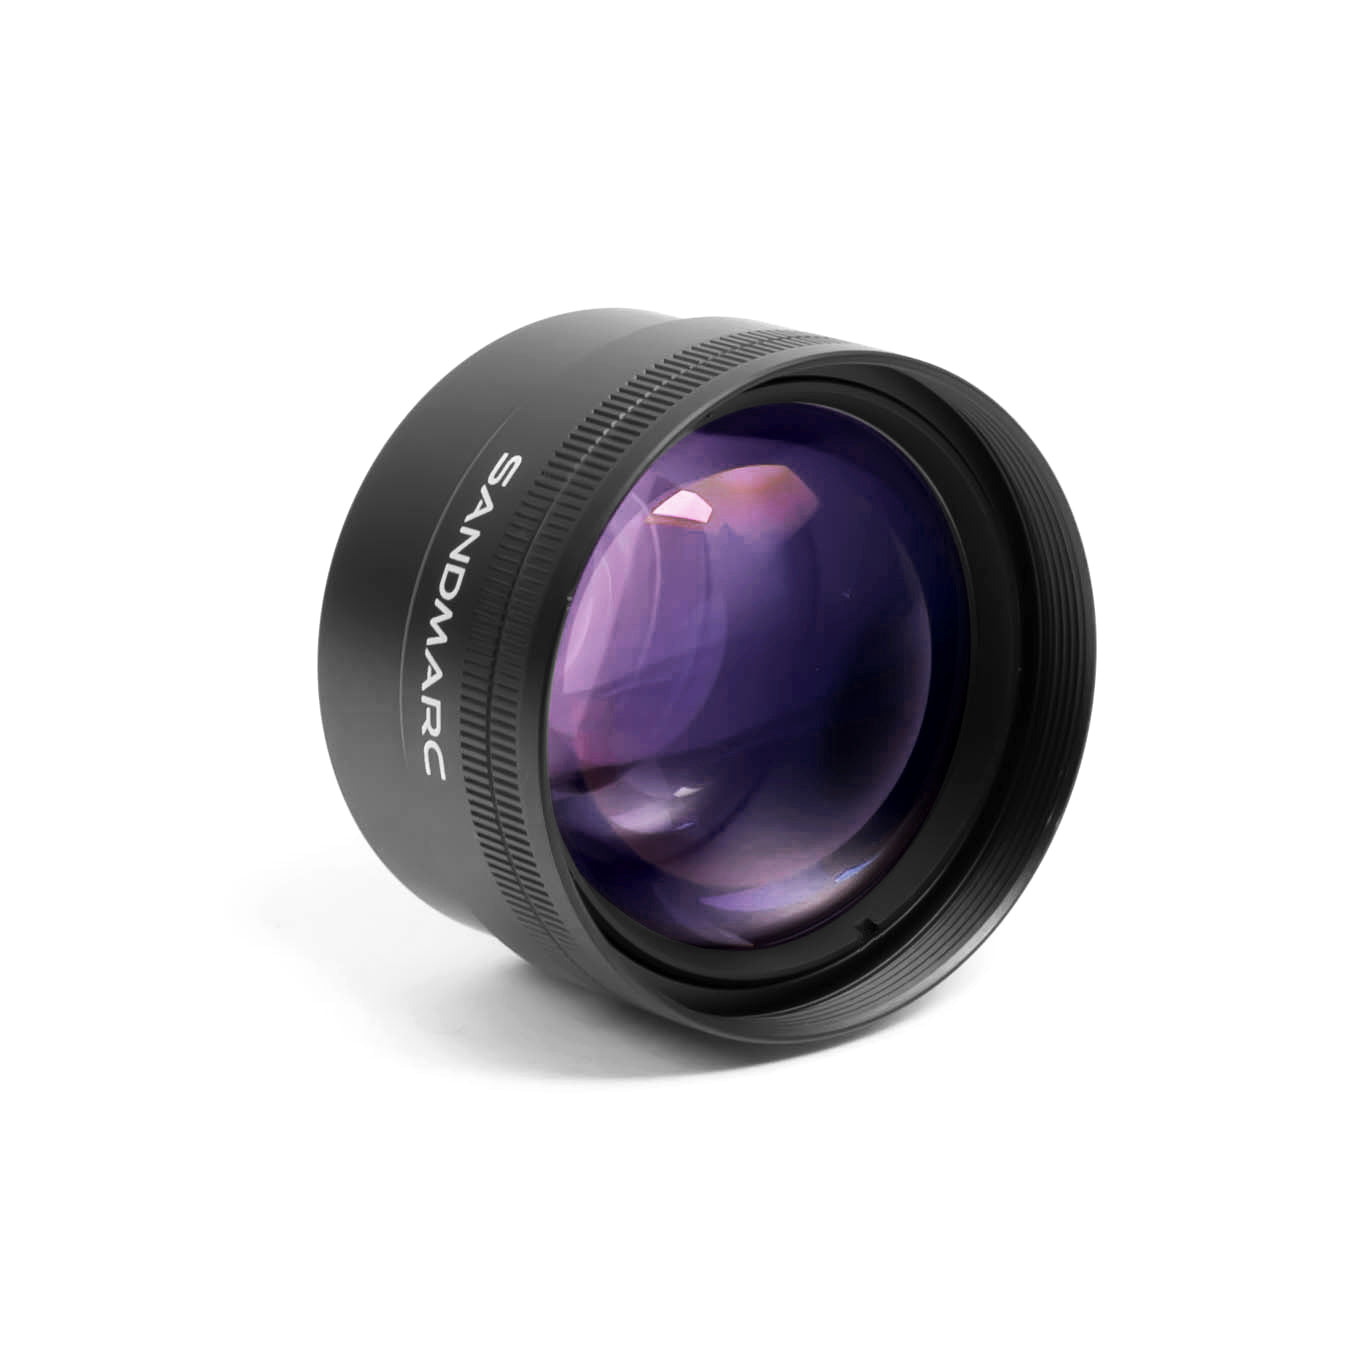 Telephoto Lens Edition - iPhone 11 Pro - SANDMARC